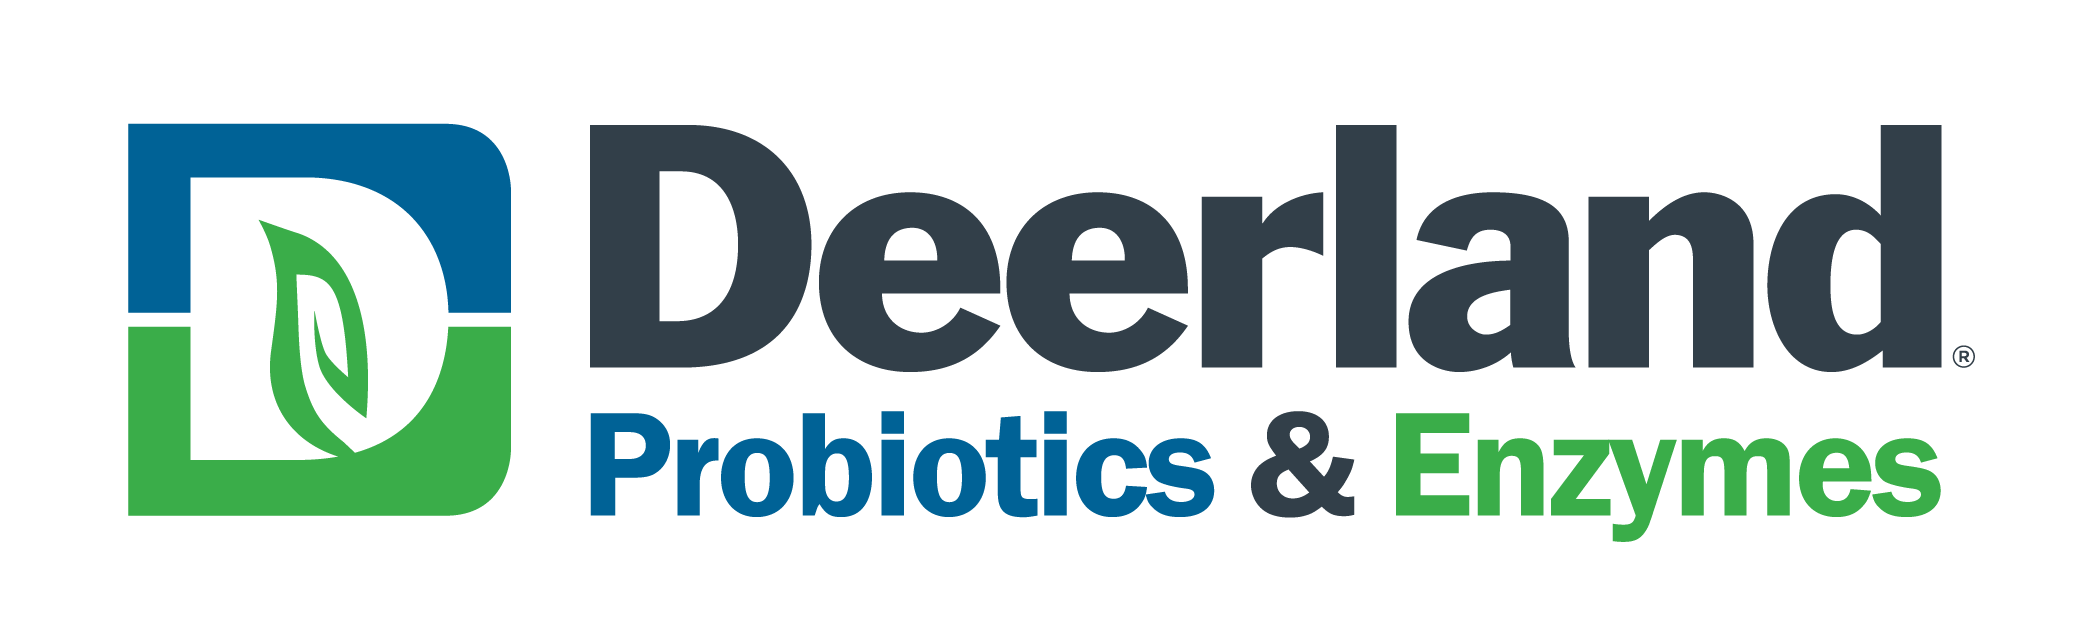 Deerland Enzymes client logo